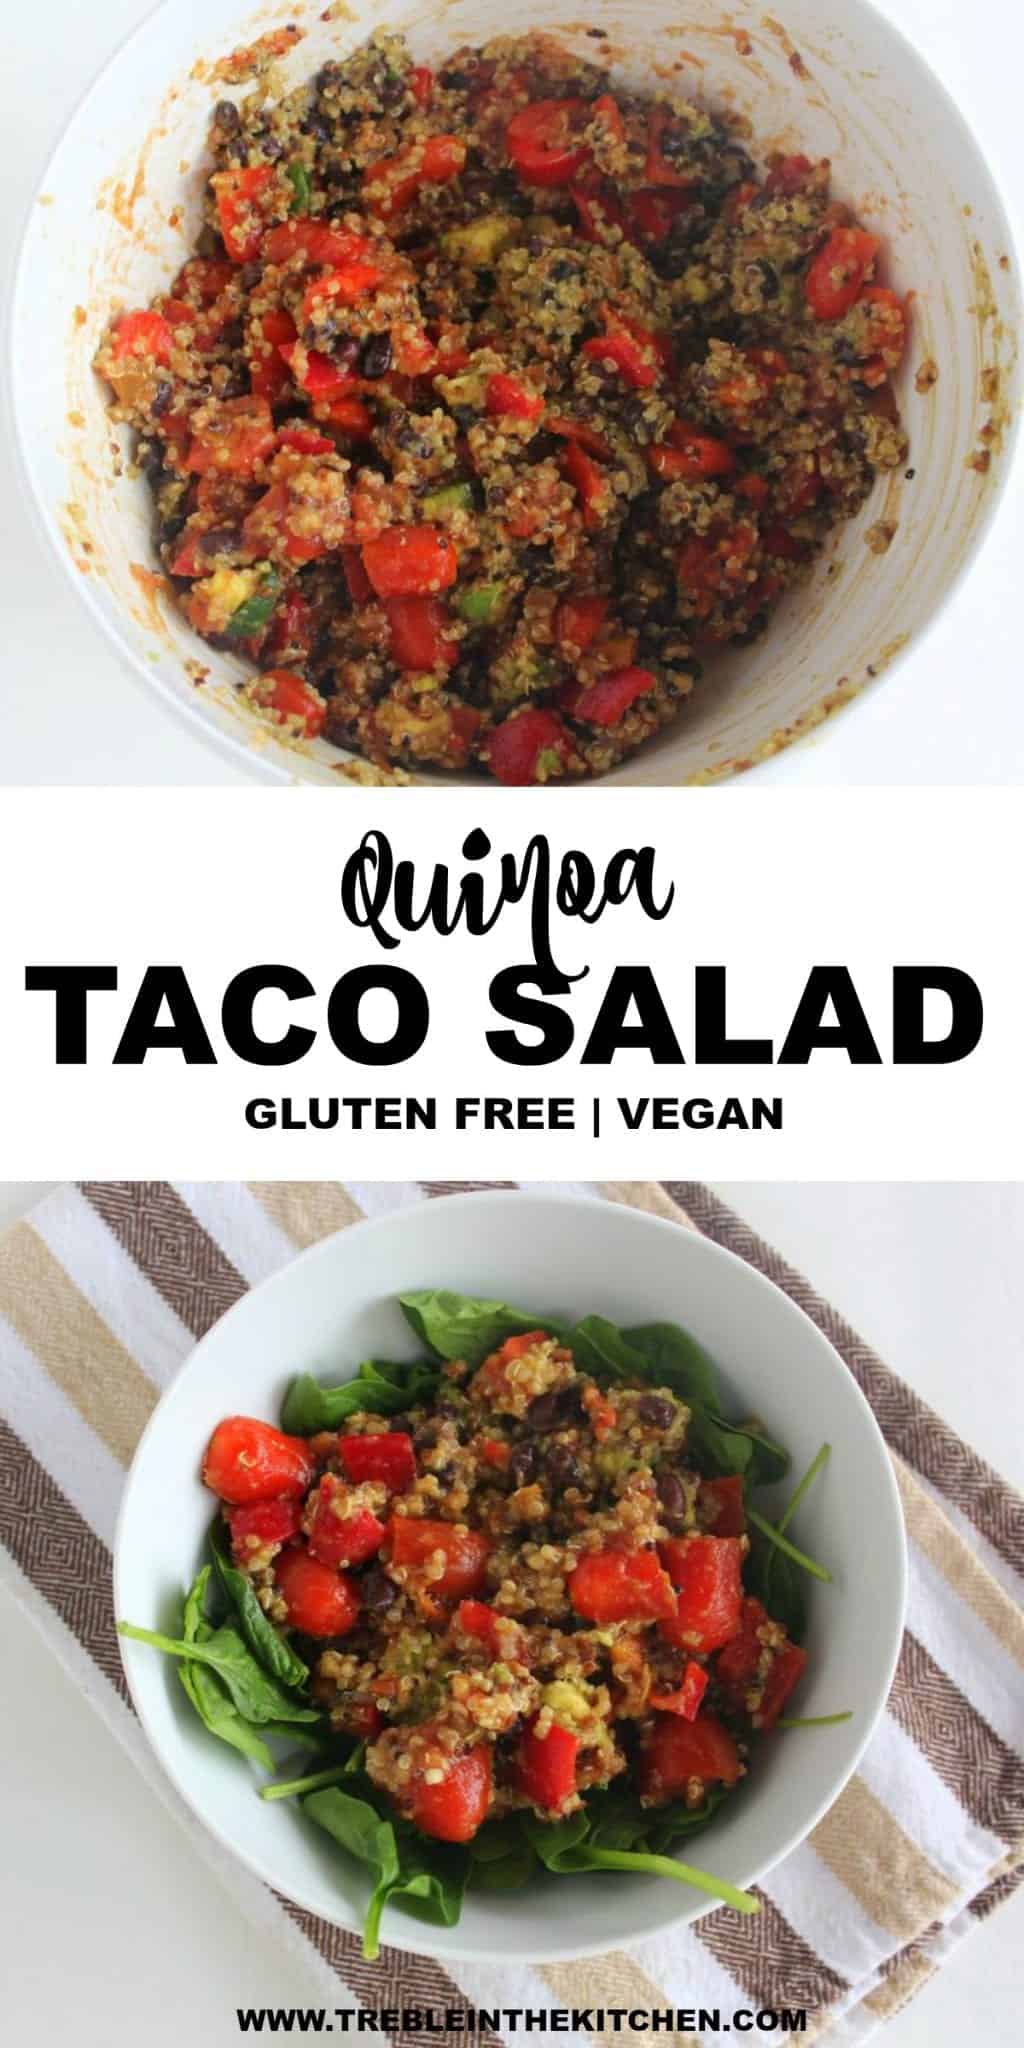 Quinoa Taco Salad from Treble in the Kitchen